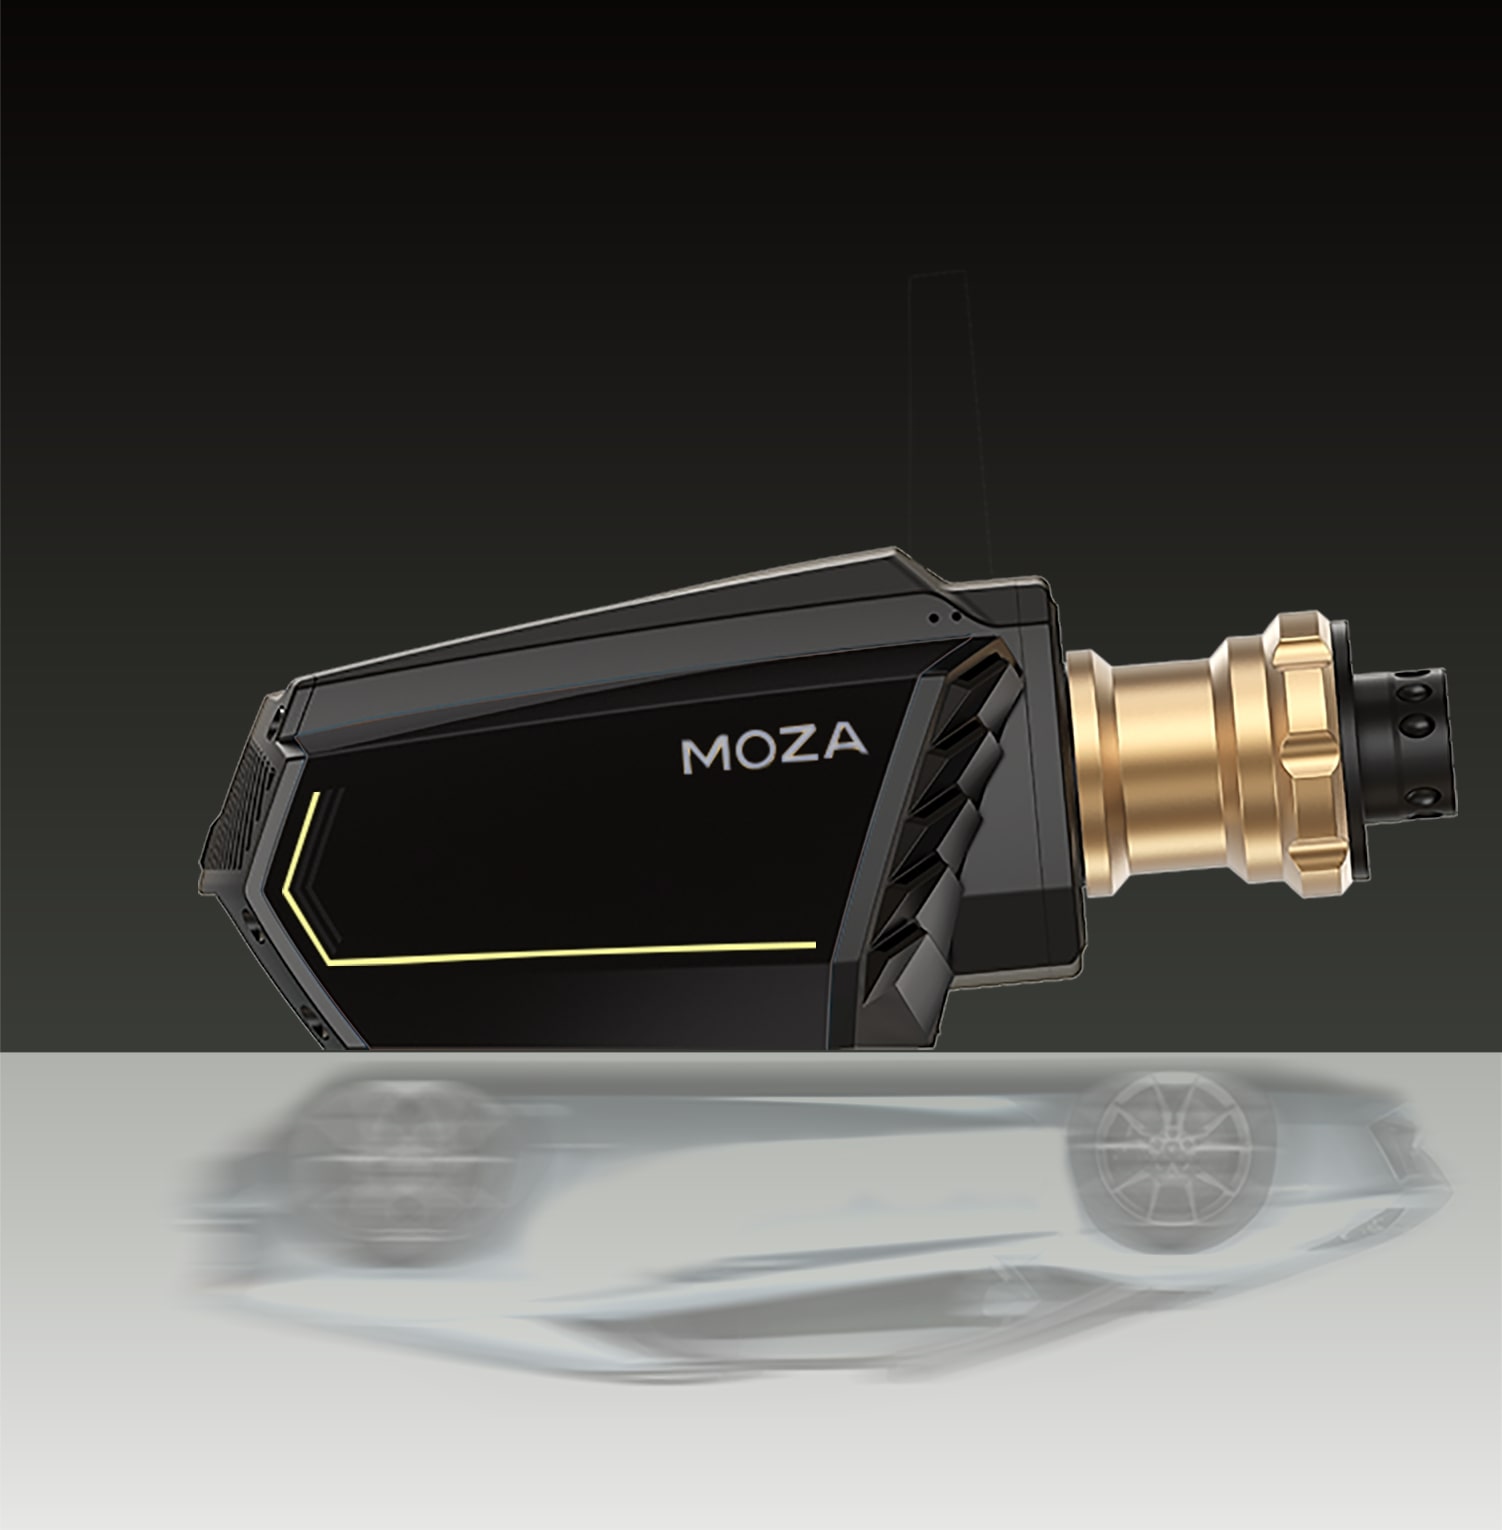 MOZA Racing arrive en Europe, faites chauffer la carte bleue !